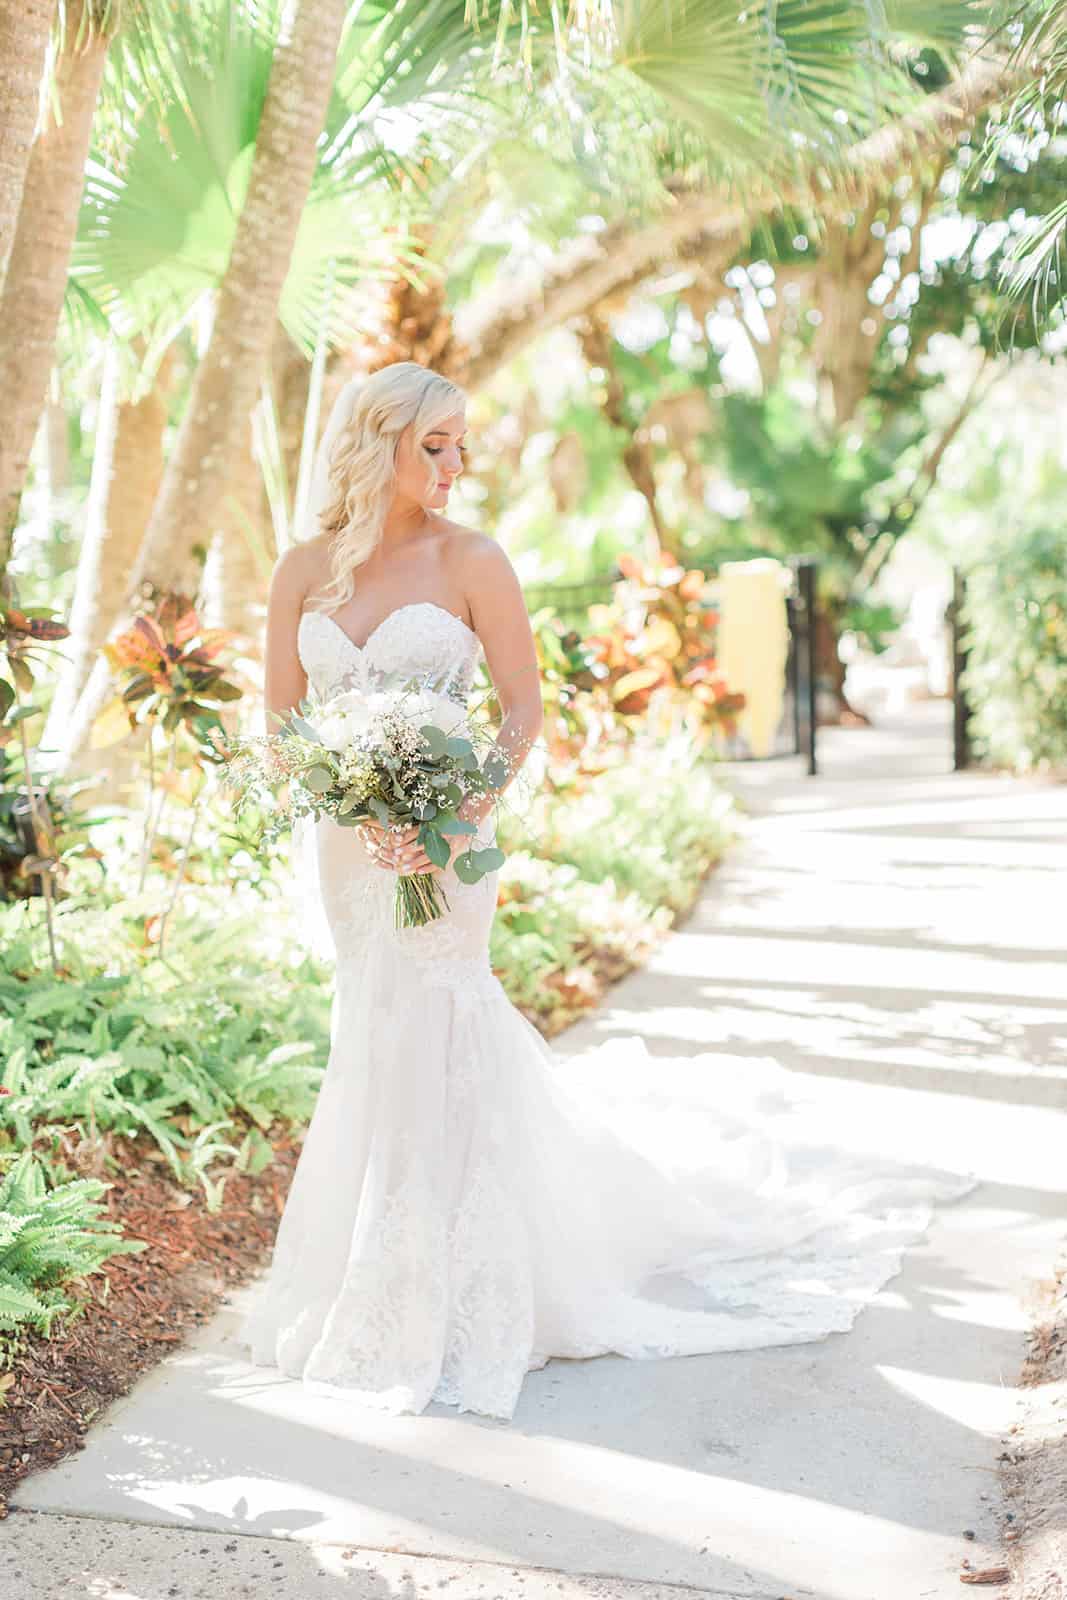 Outdoor Ceremony - Just Marry Weddings - The Hendricks Photography